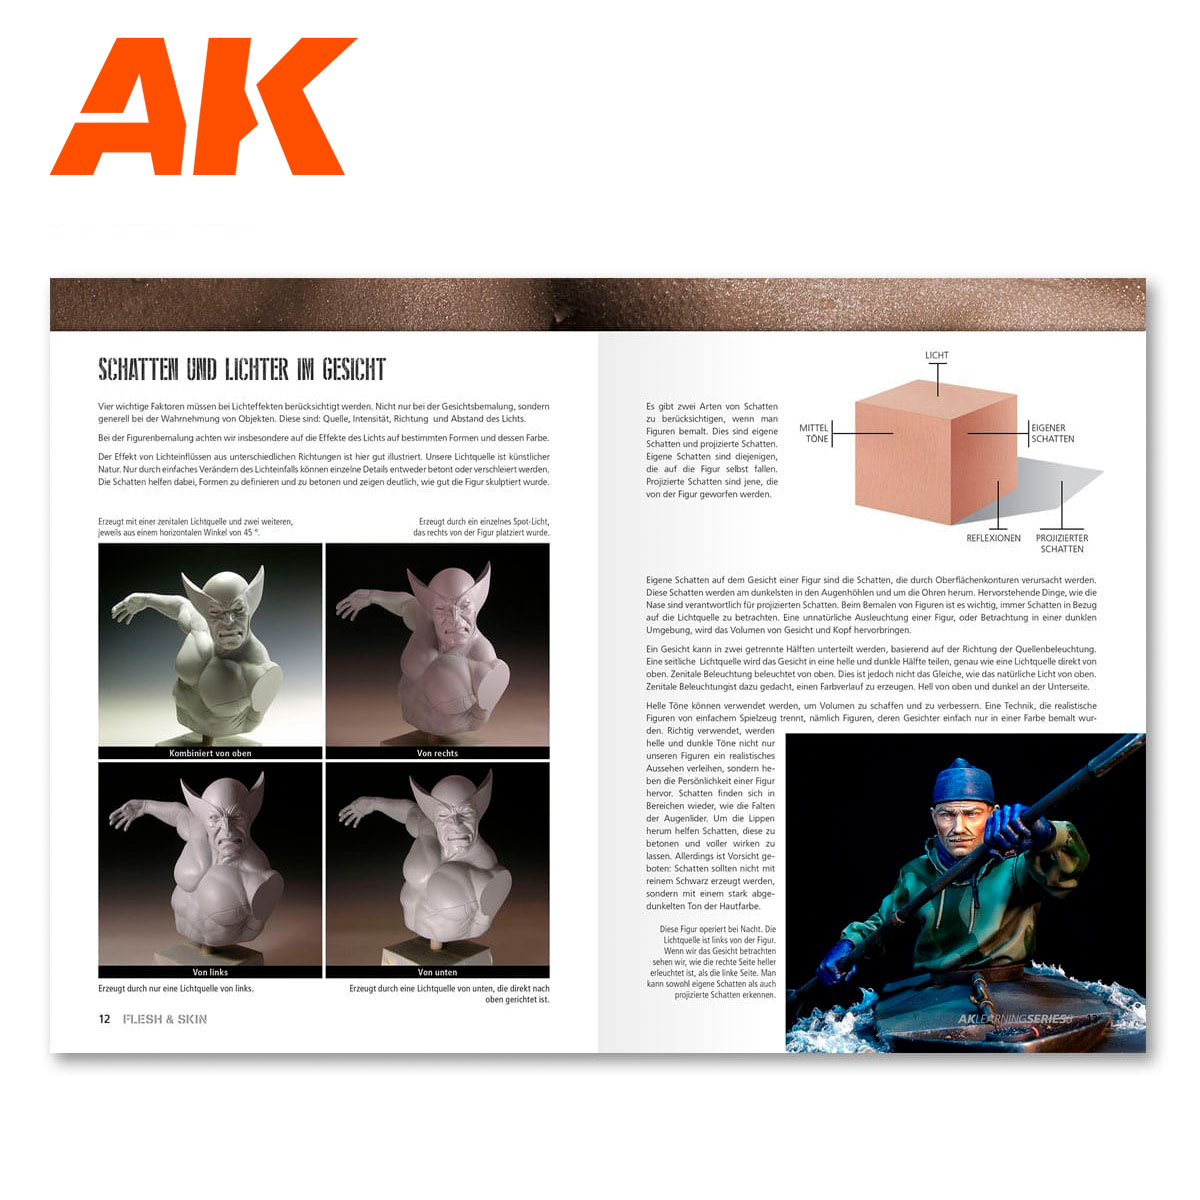 AK Learning Series: 06 - Flesch & Skin